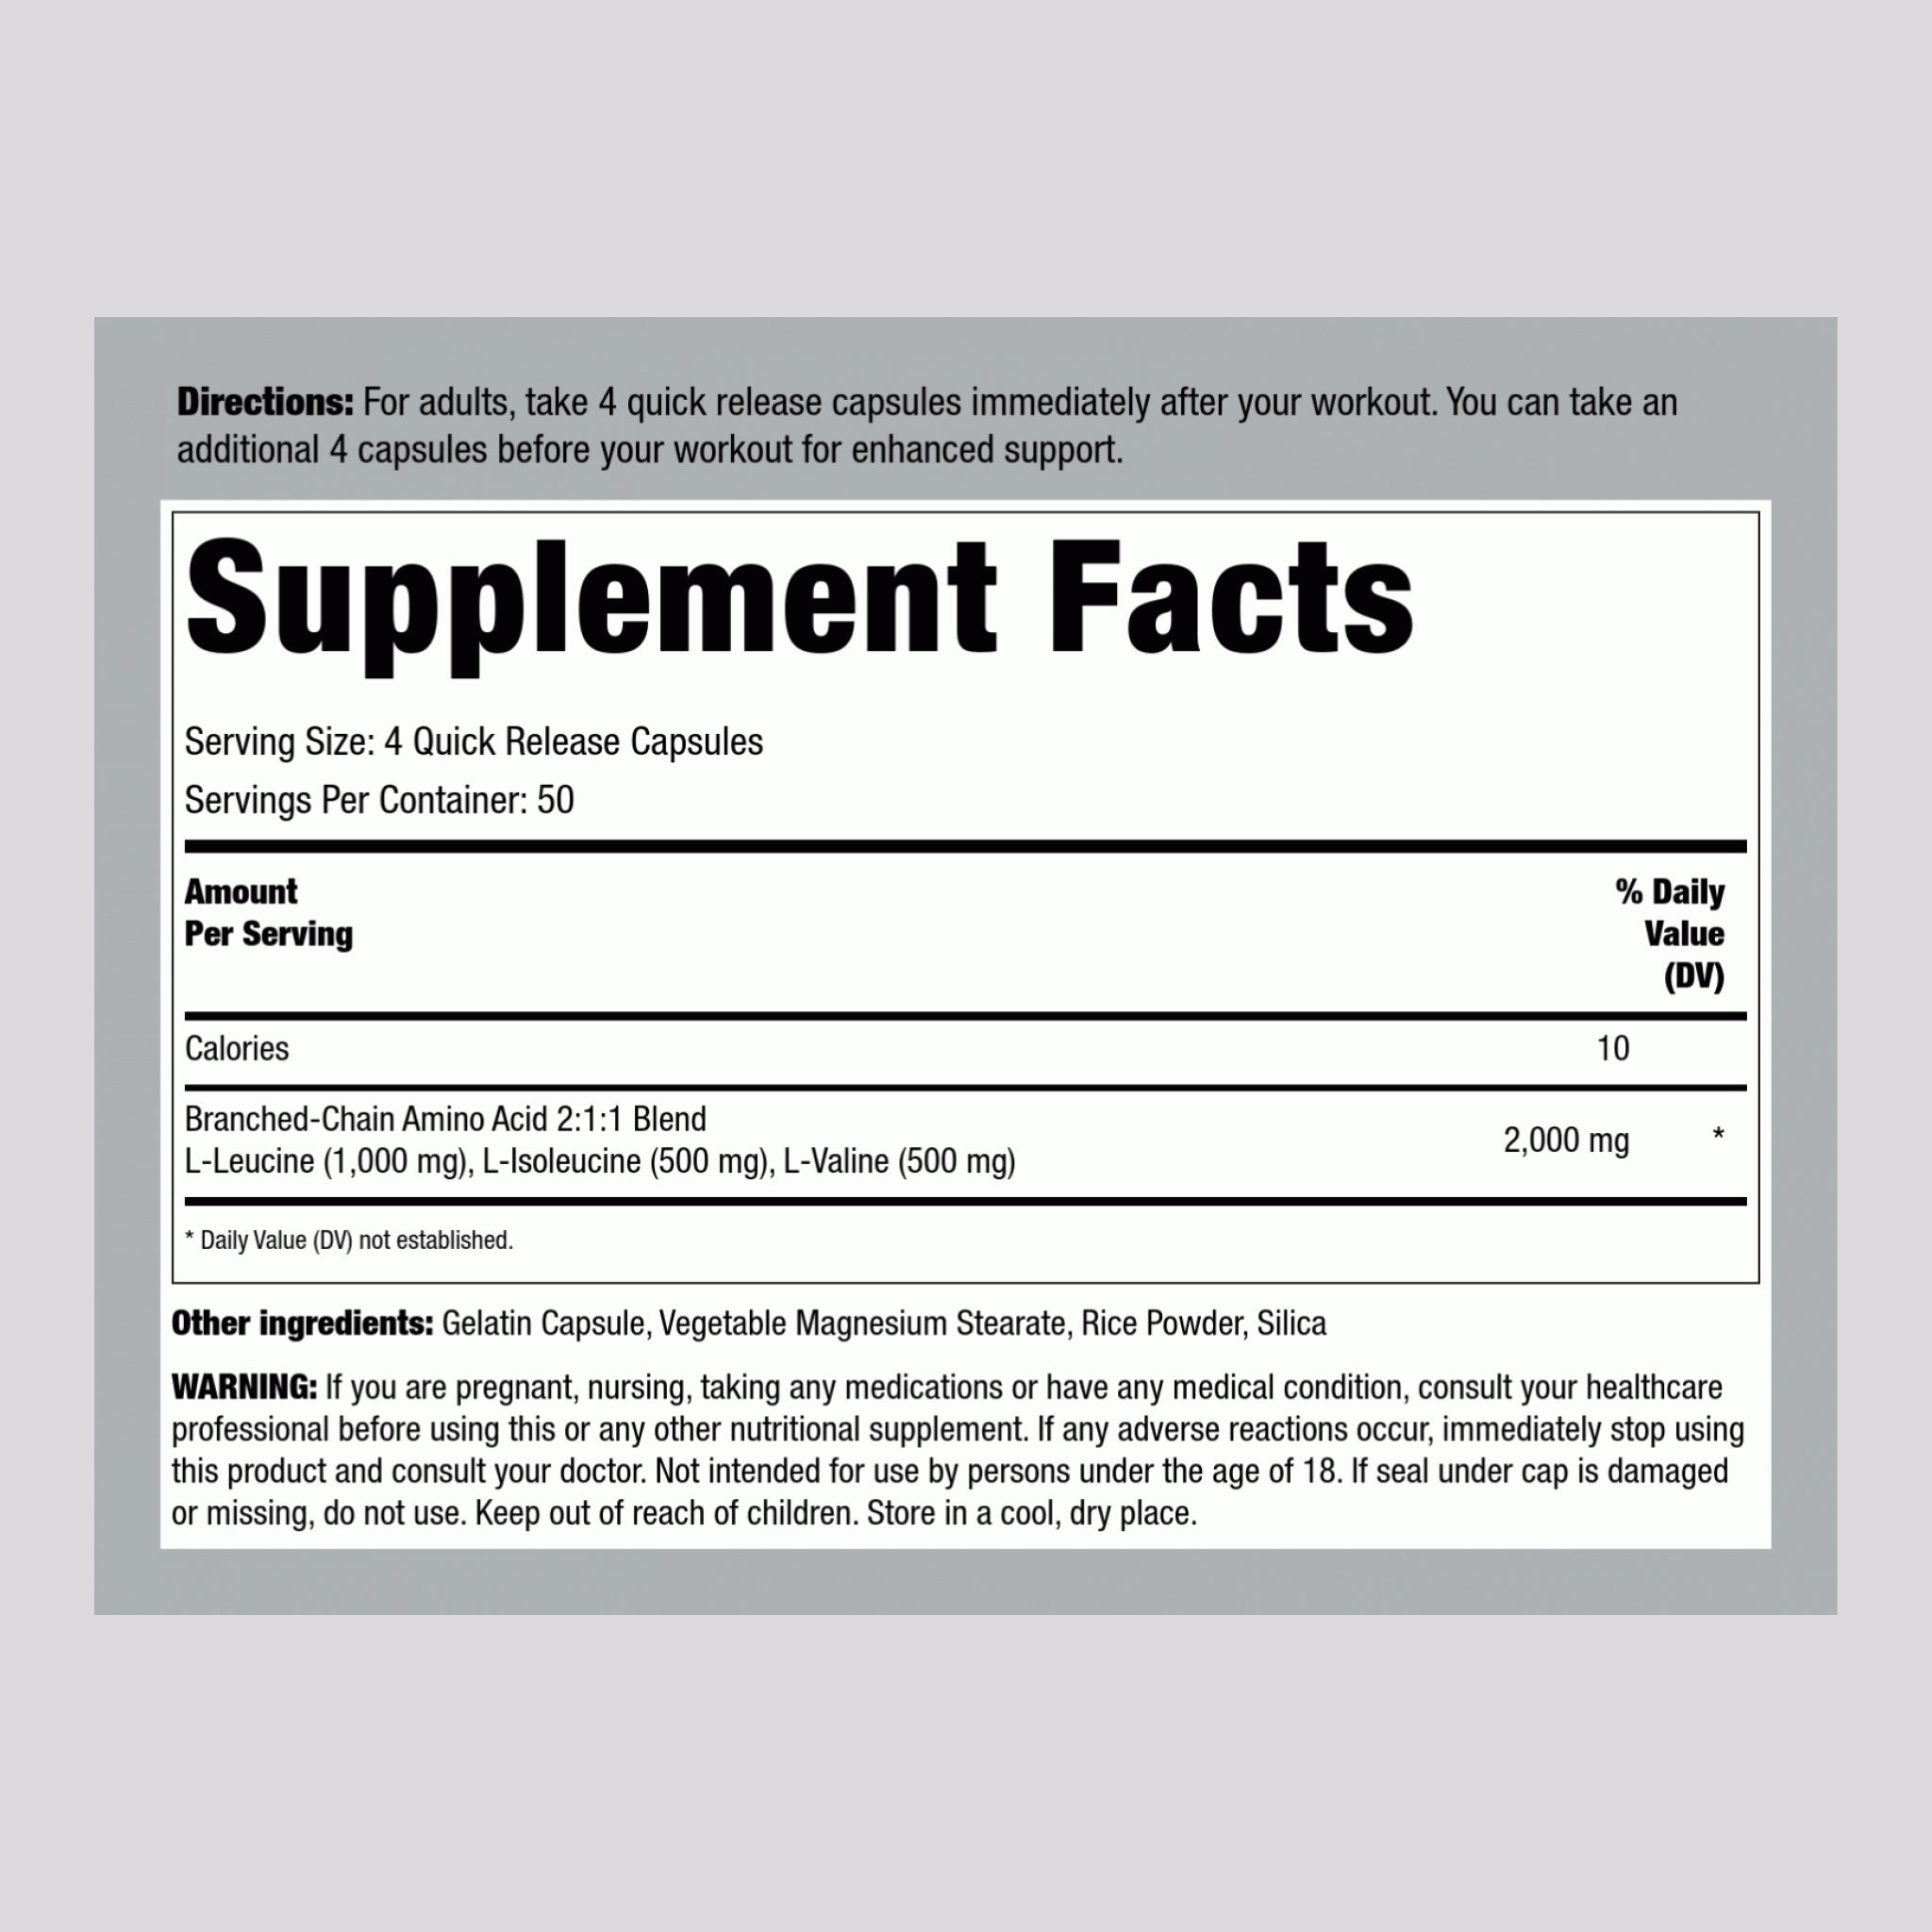 BCAAFit 2000, 2000 mg (per serving), 200 Capsules